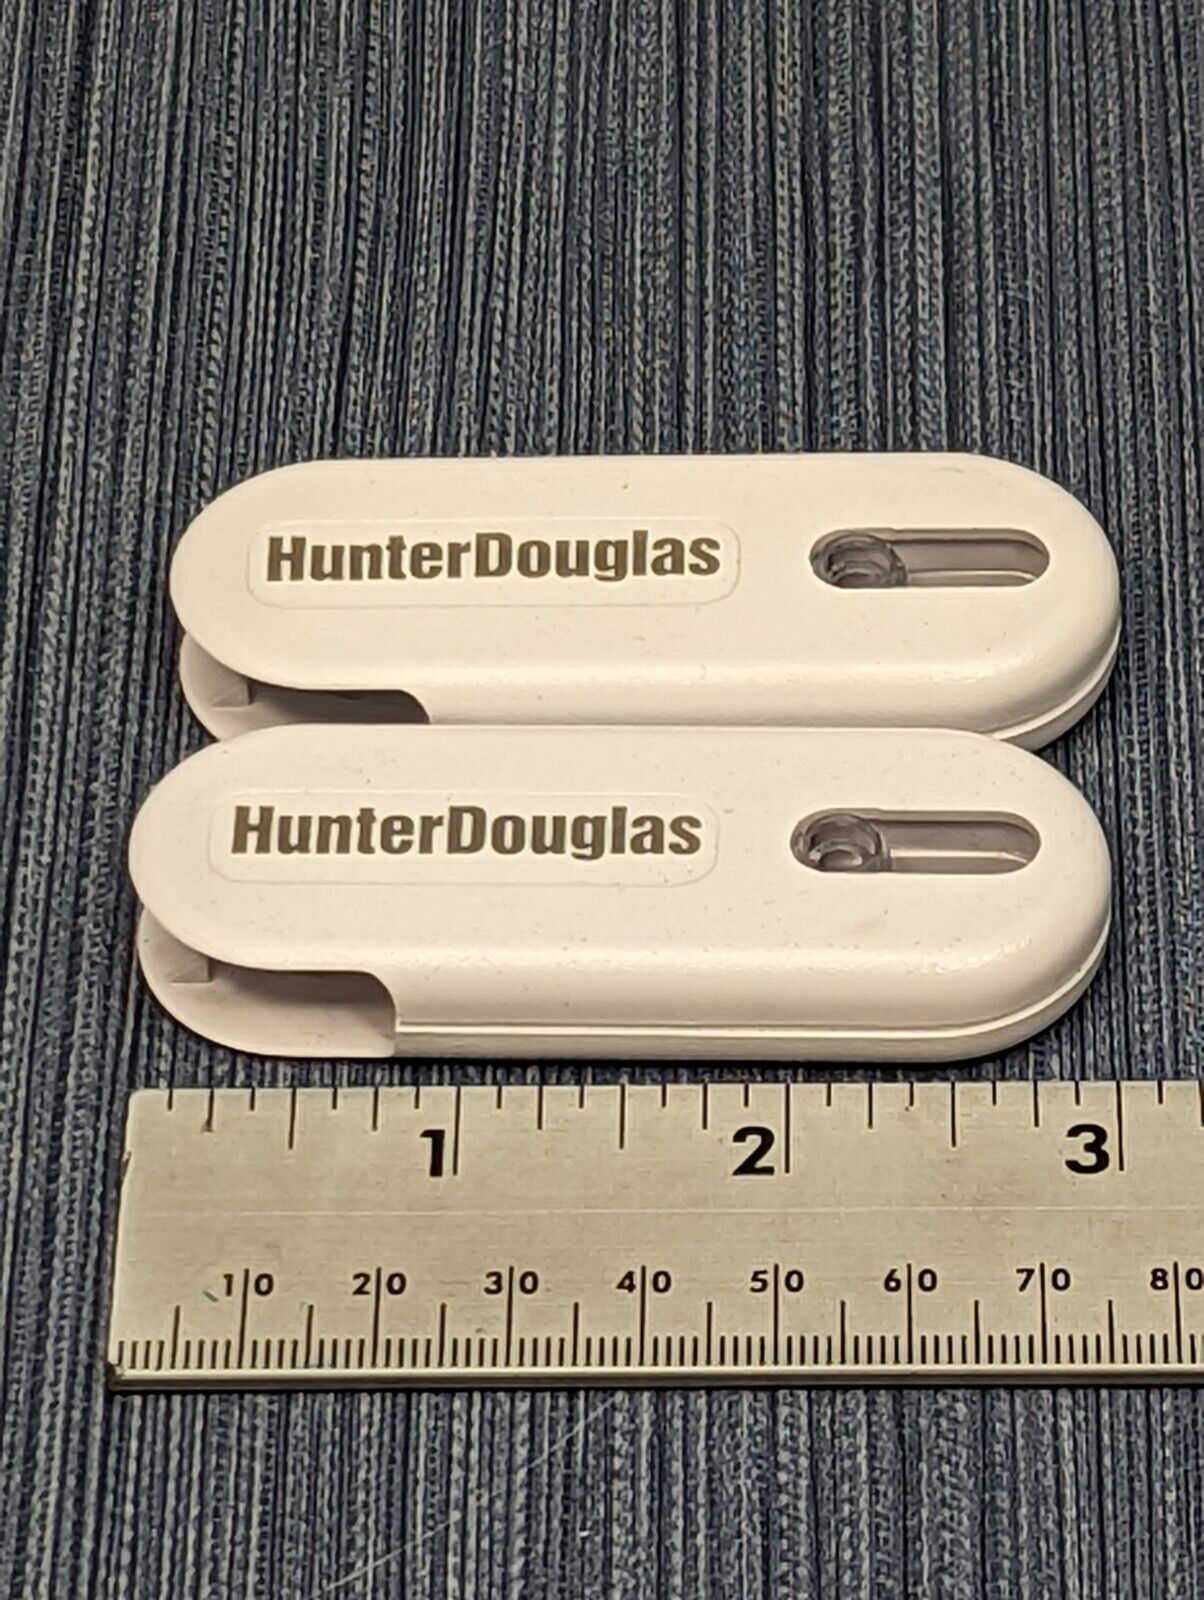 2 x Hunter Douglas Spring Loaded Cord Tensioner white for Roller Shades 1"x3" Hunter Douglas